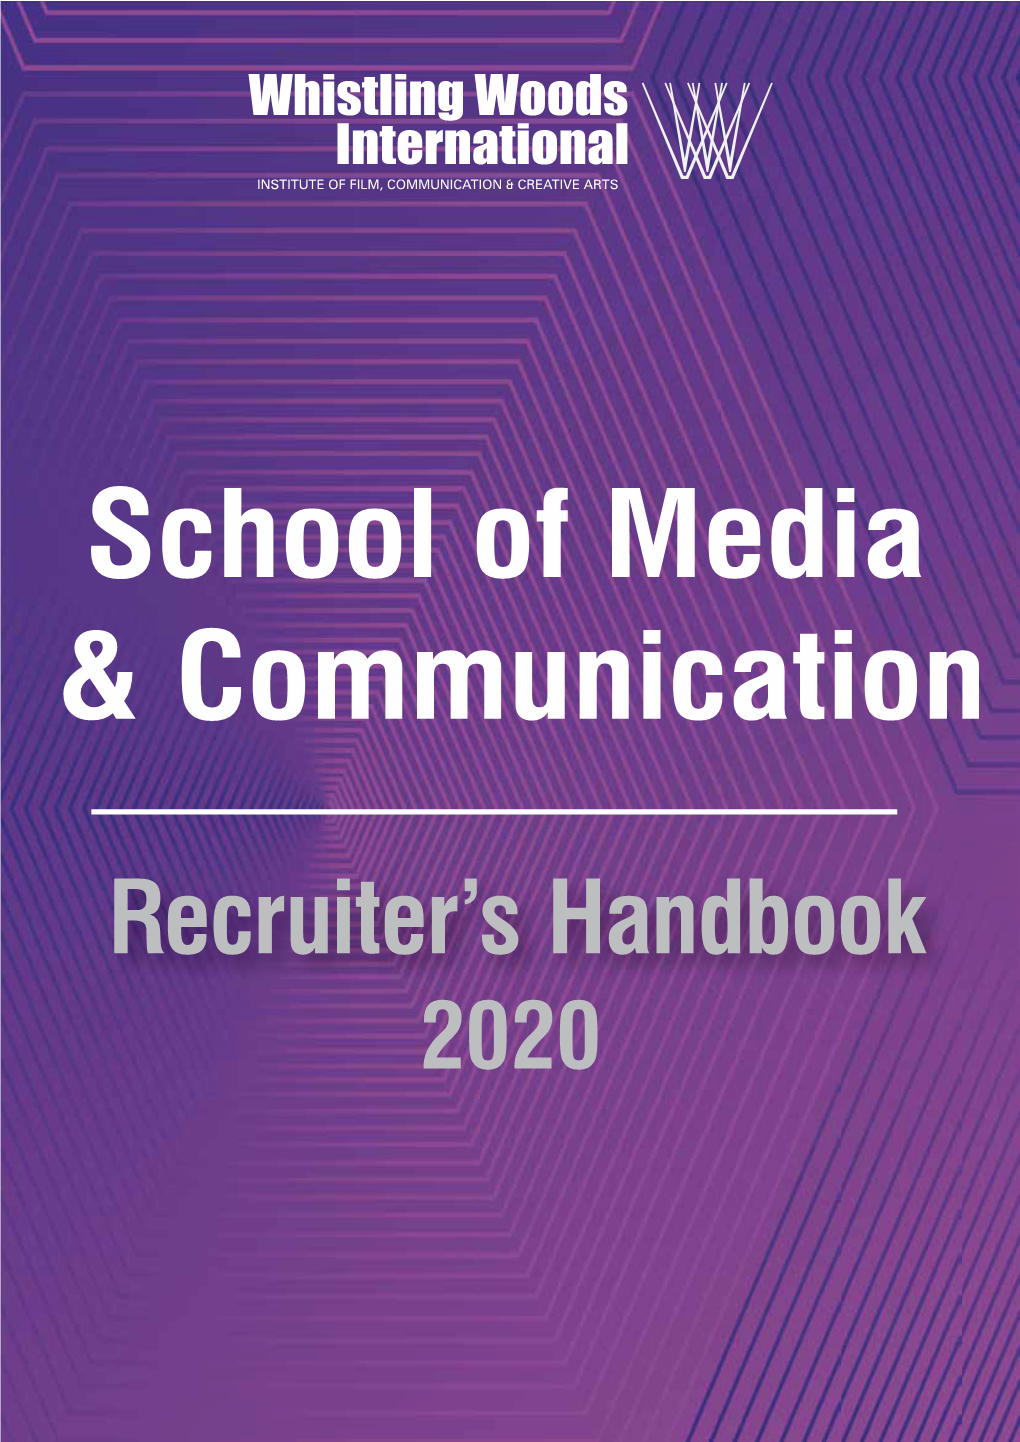 Recruiter's Handbook 2020